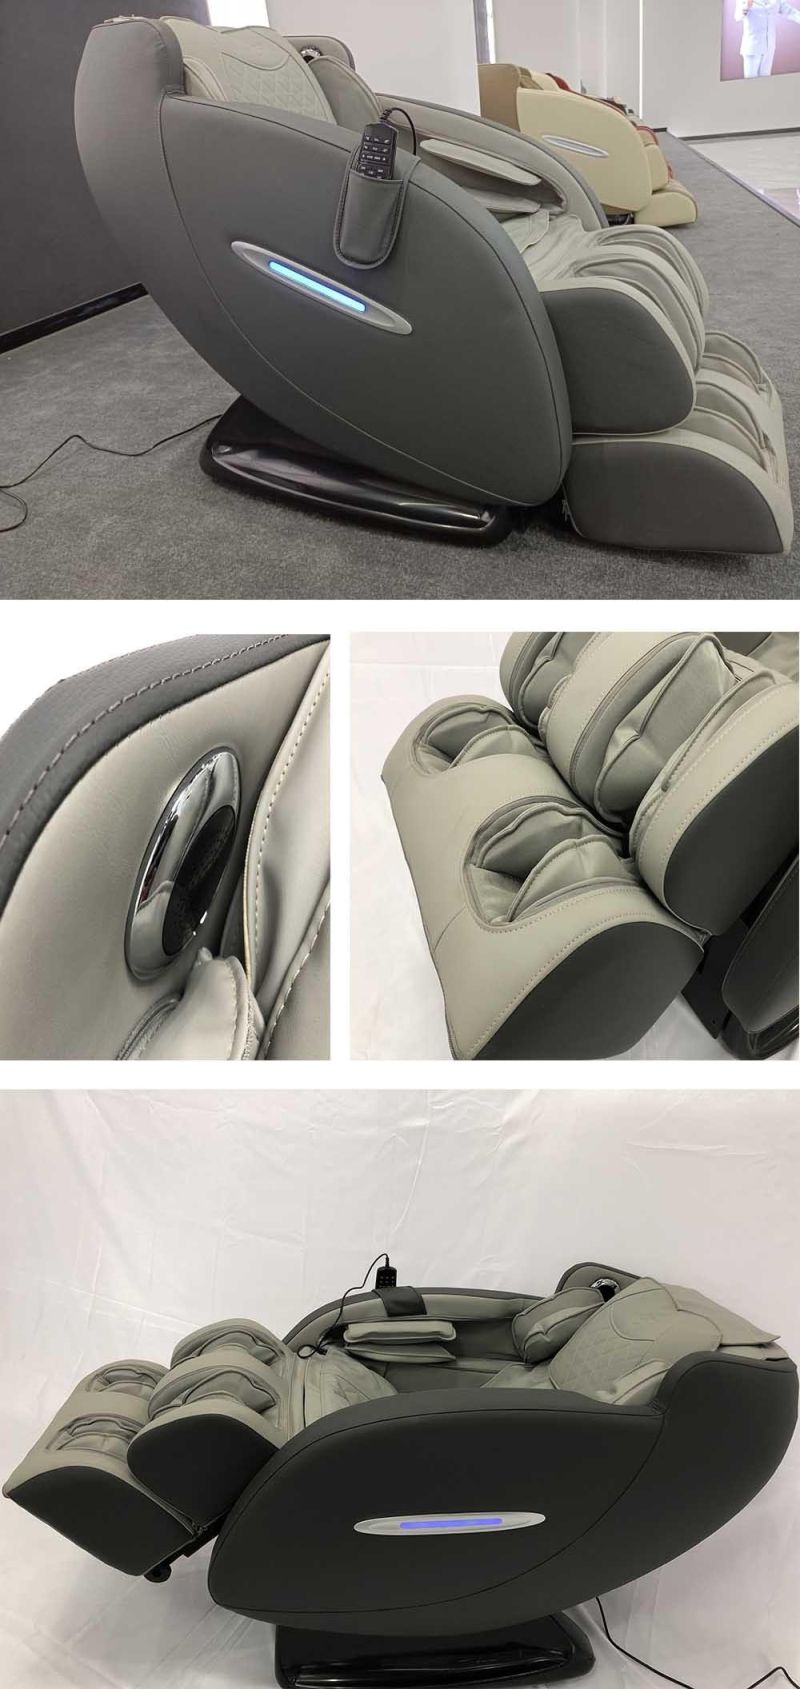 Massage Chair Zero Gravity Luxury Shiatsu 3D Chair Massage PU Leather